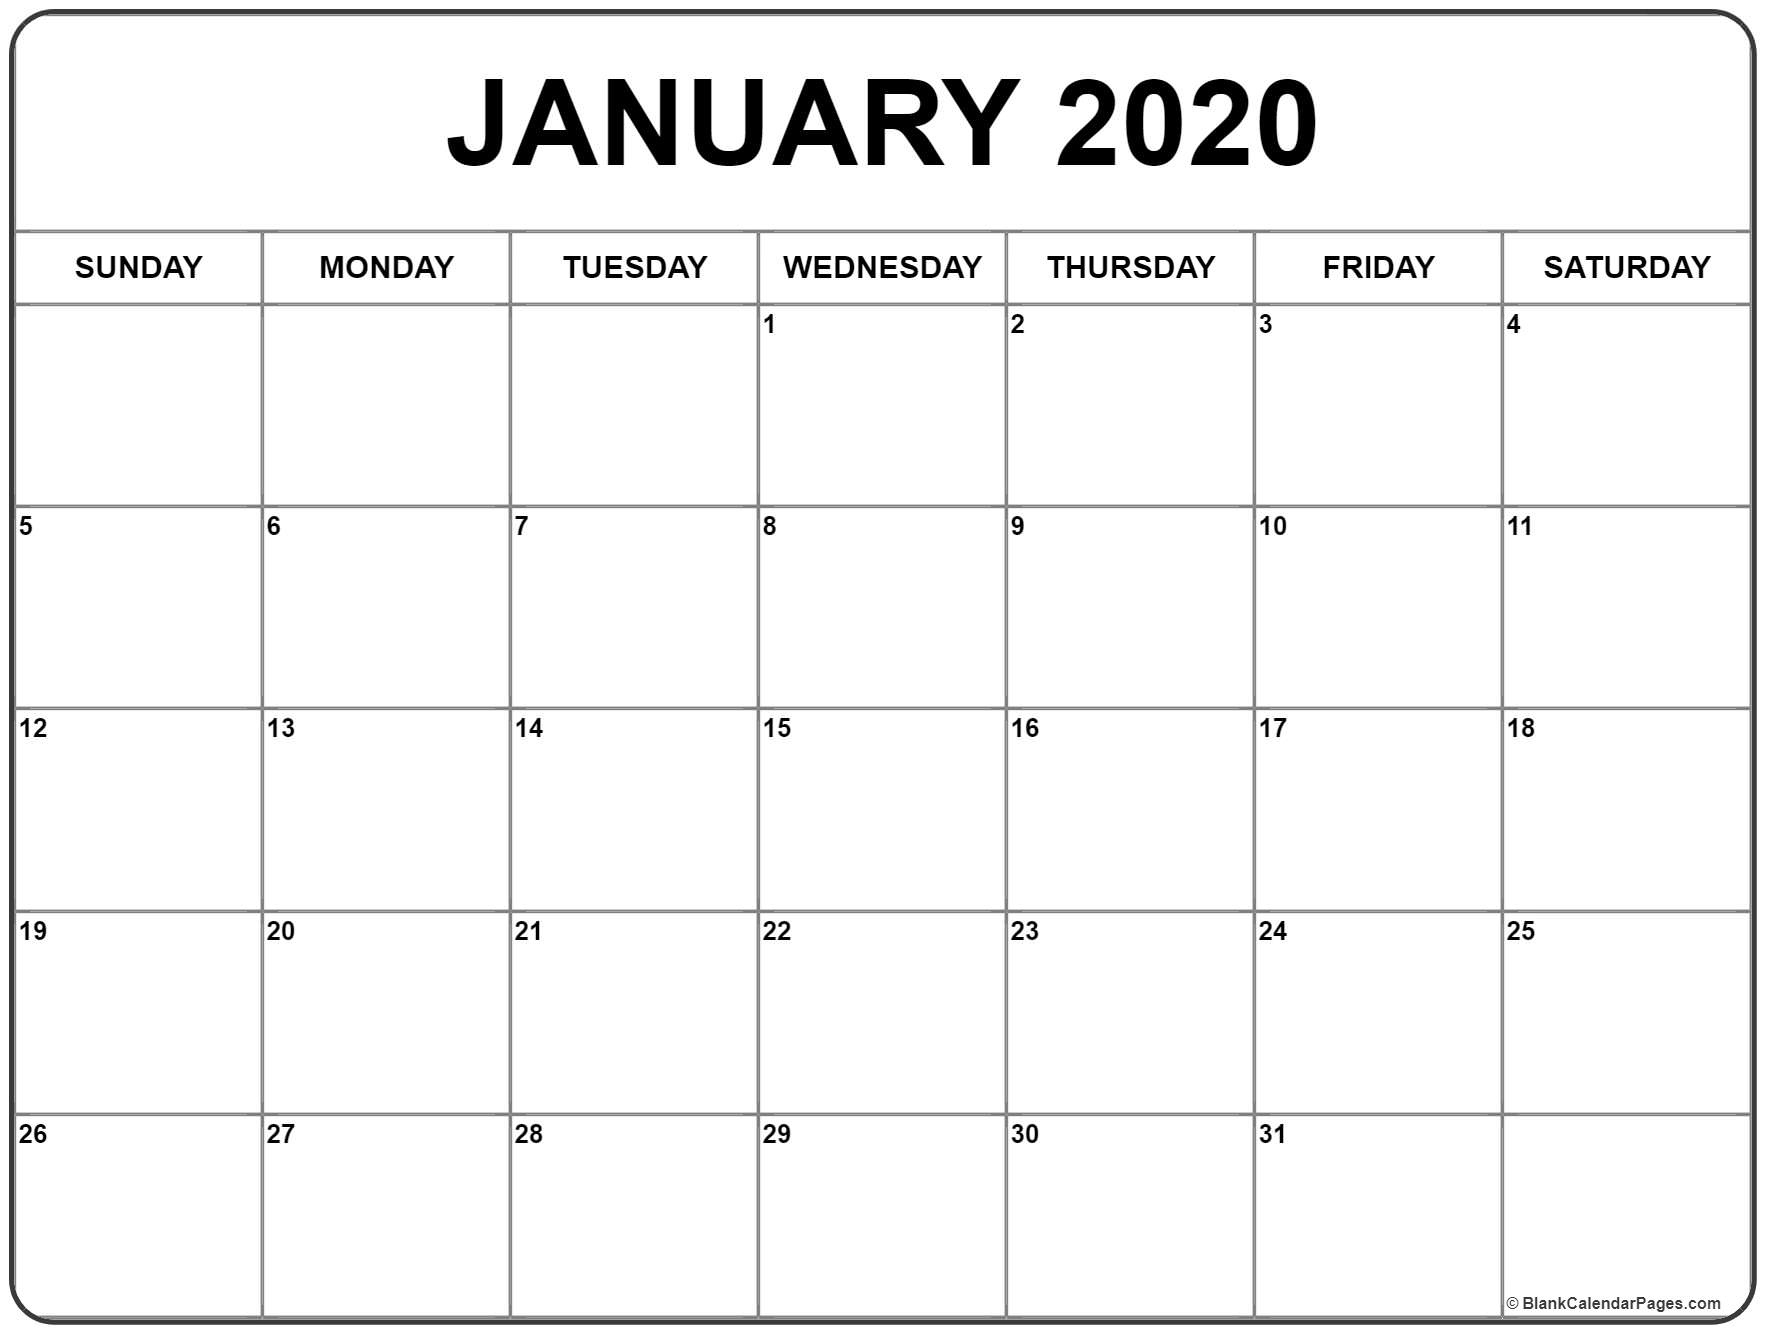 January 2020 Calendar | Free Printable Monthly Calendars Impressive 2020 Calendar Is Same As